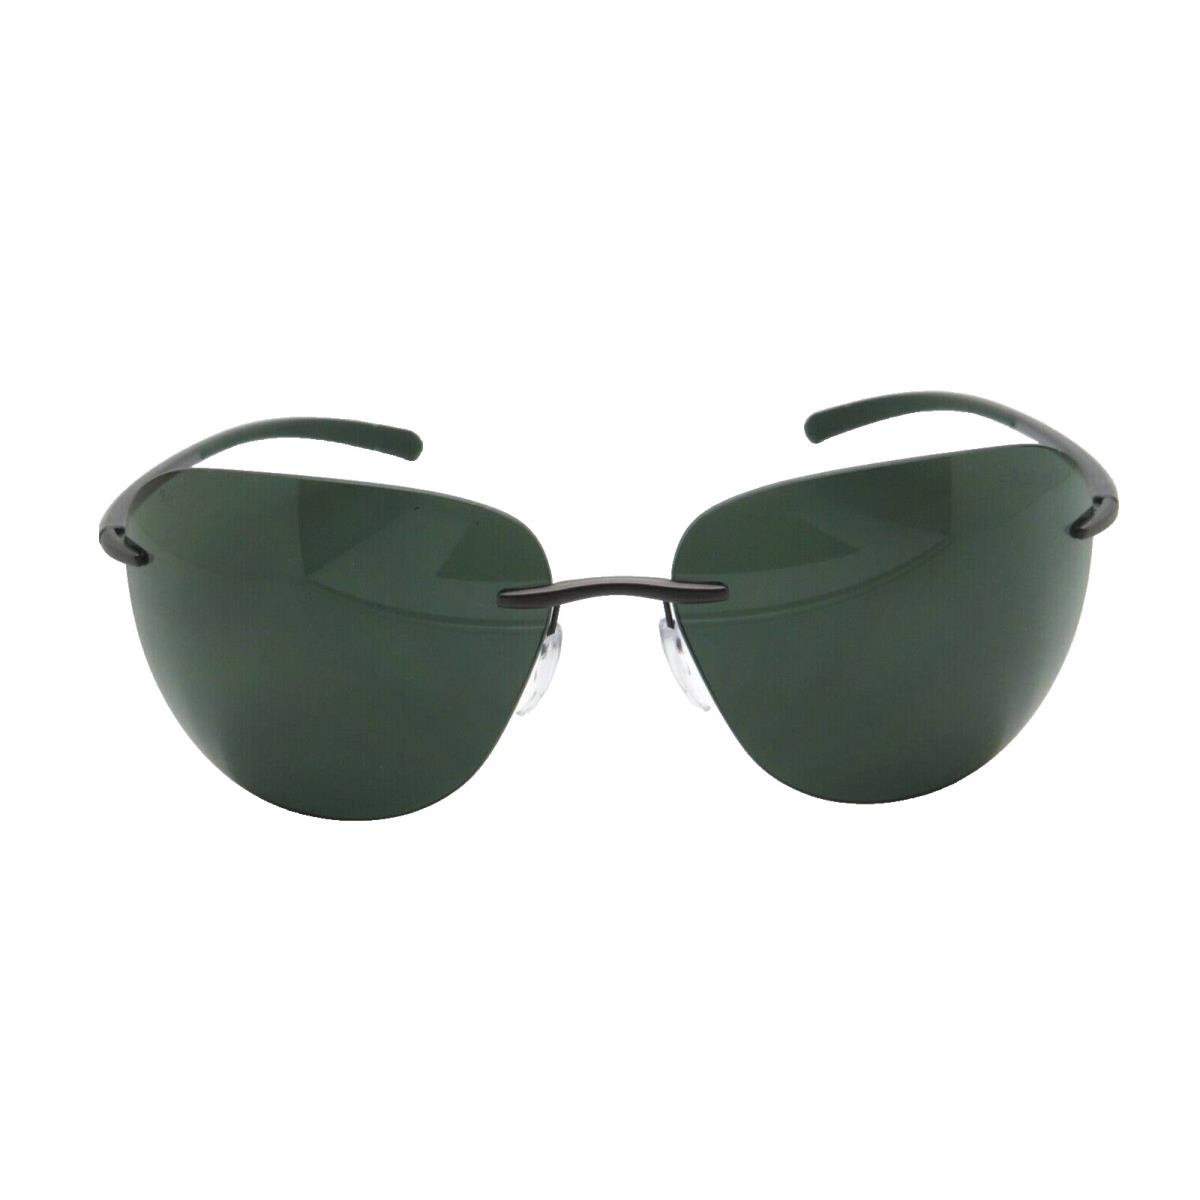 Silhouette Bayside 8729 Grey Pine Green/green Polarized 6660 Sunglasses - Frame: Grey Pine Green, Lens: Green Polarized